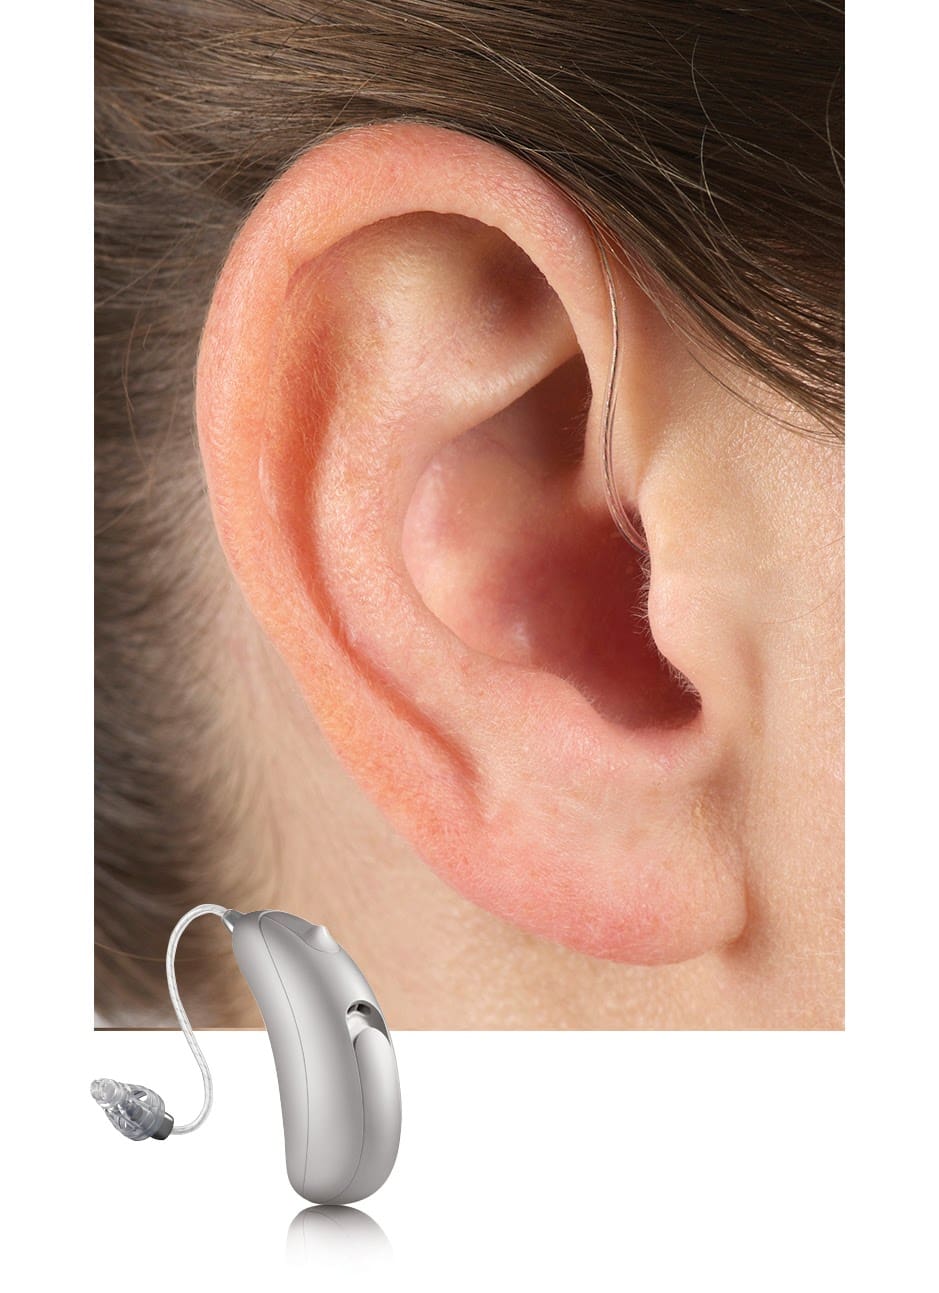 Hearswell - Isanti, MN, US, digital hearing aids cost